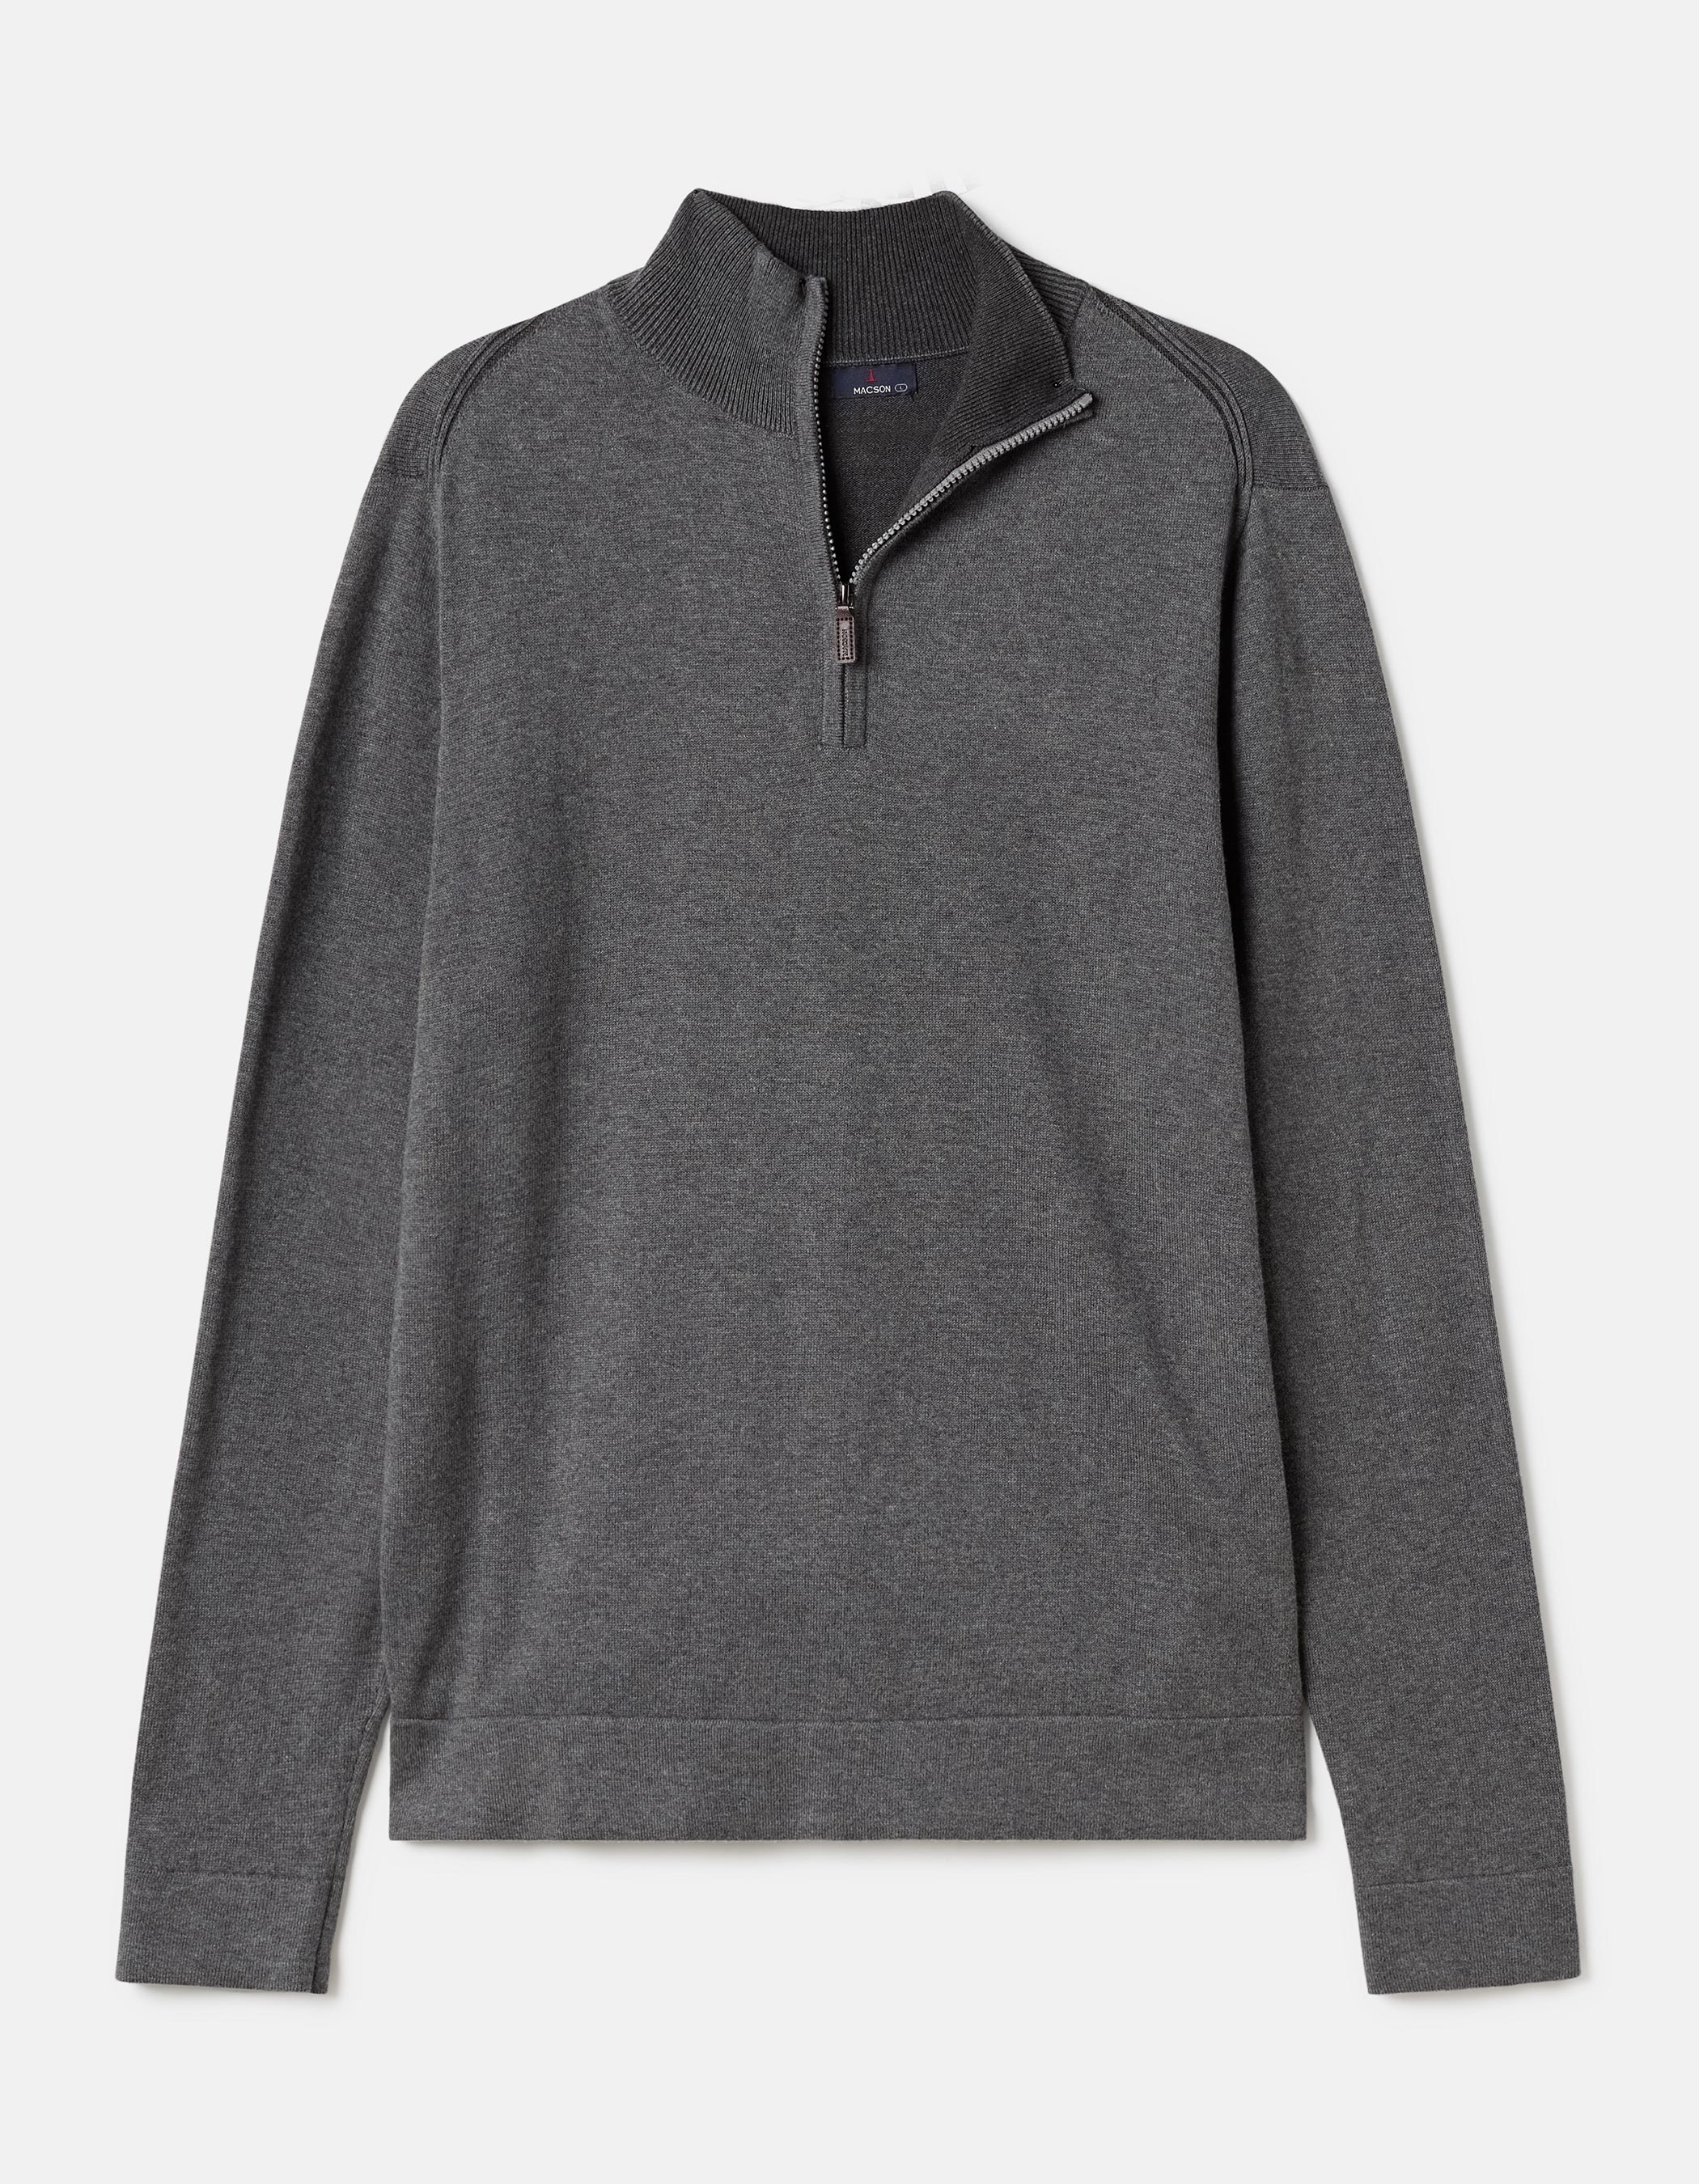 Grey collar jumper with zip